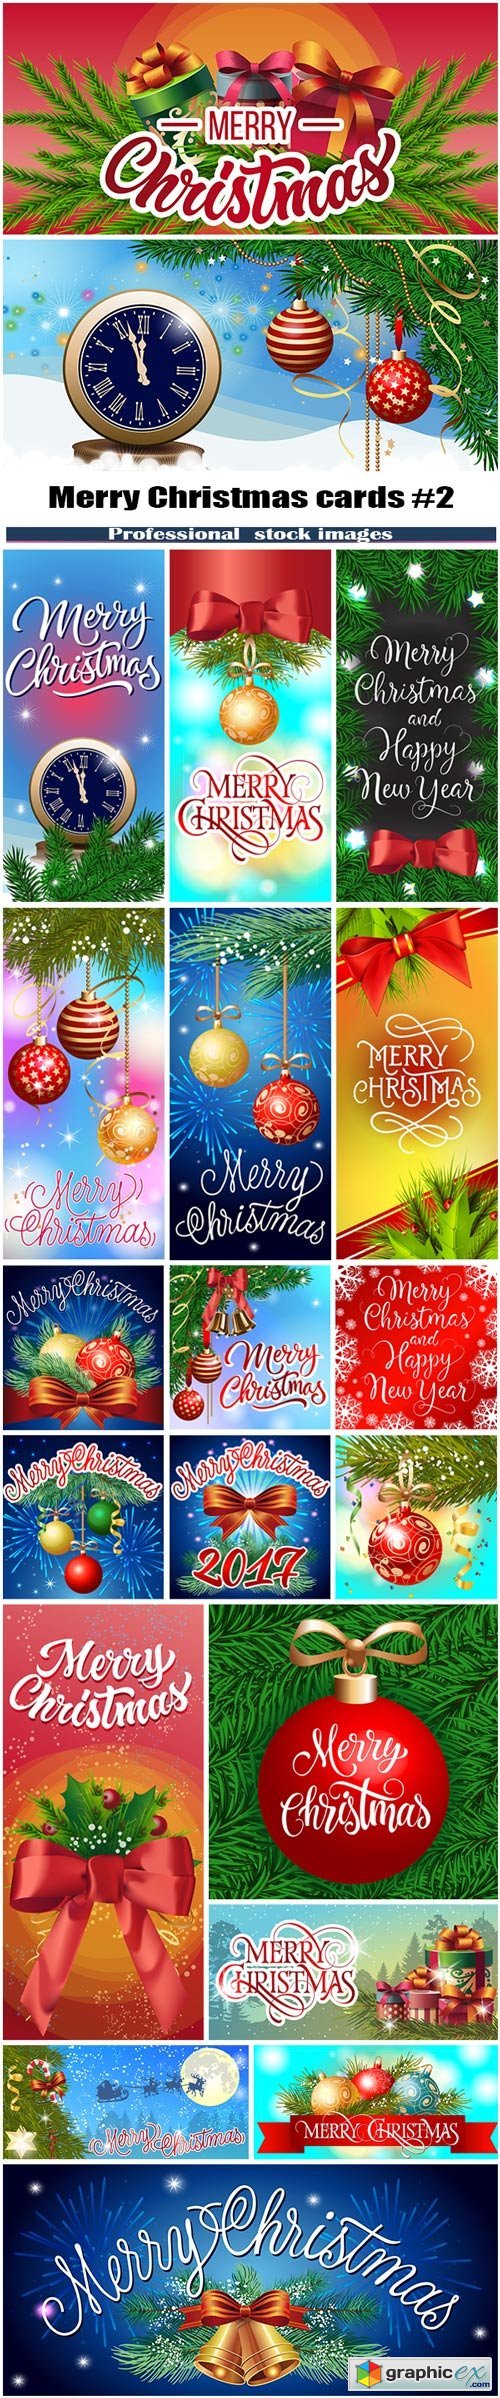 Merry Christmas cards #2